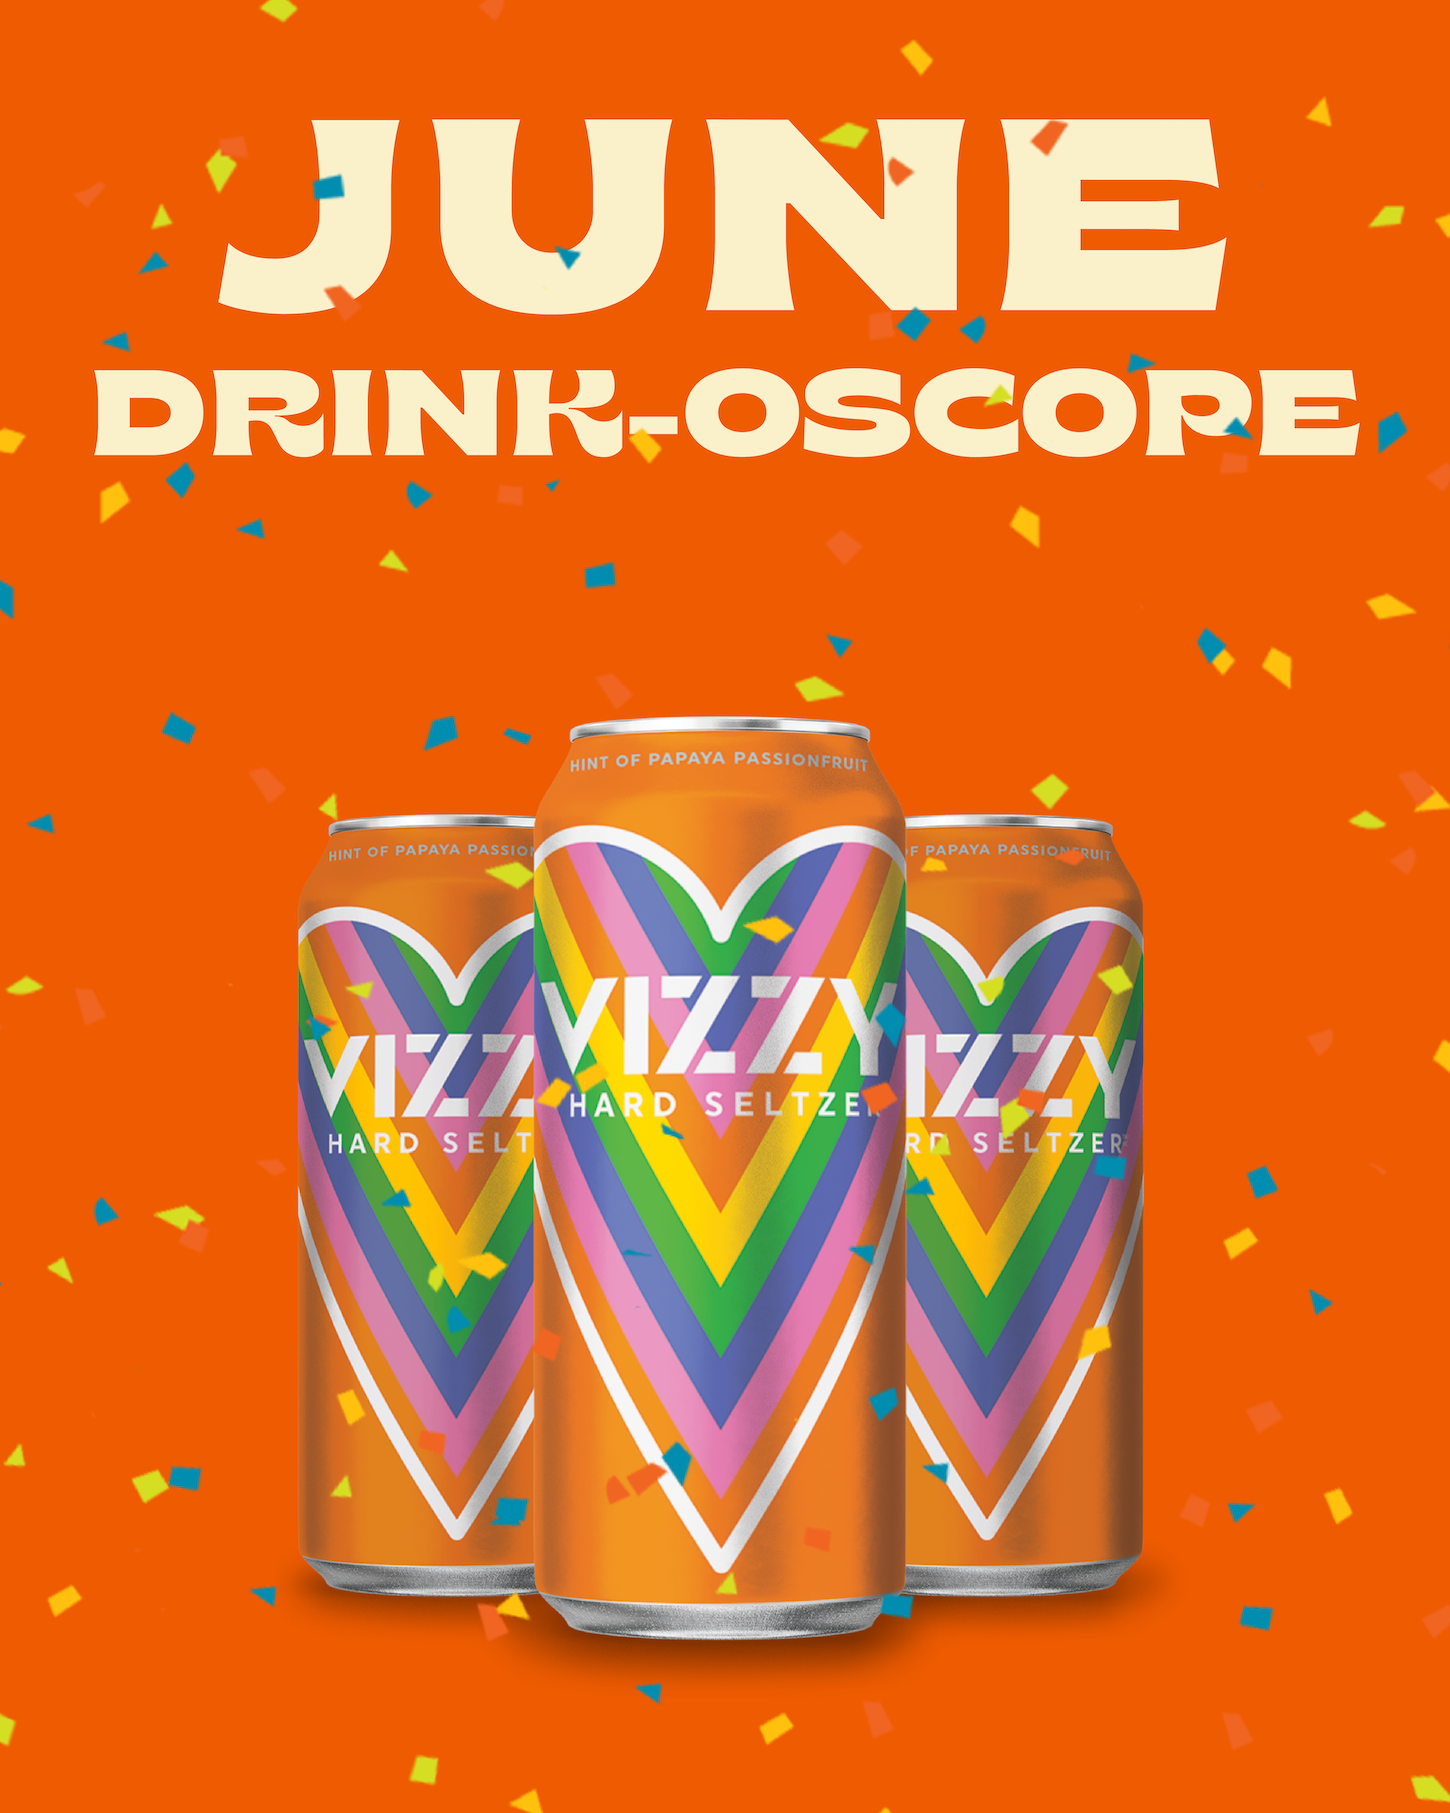 June Drink-oscope